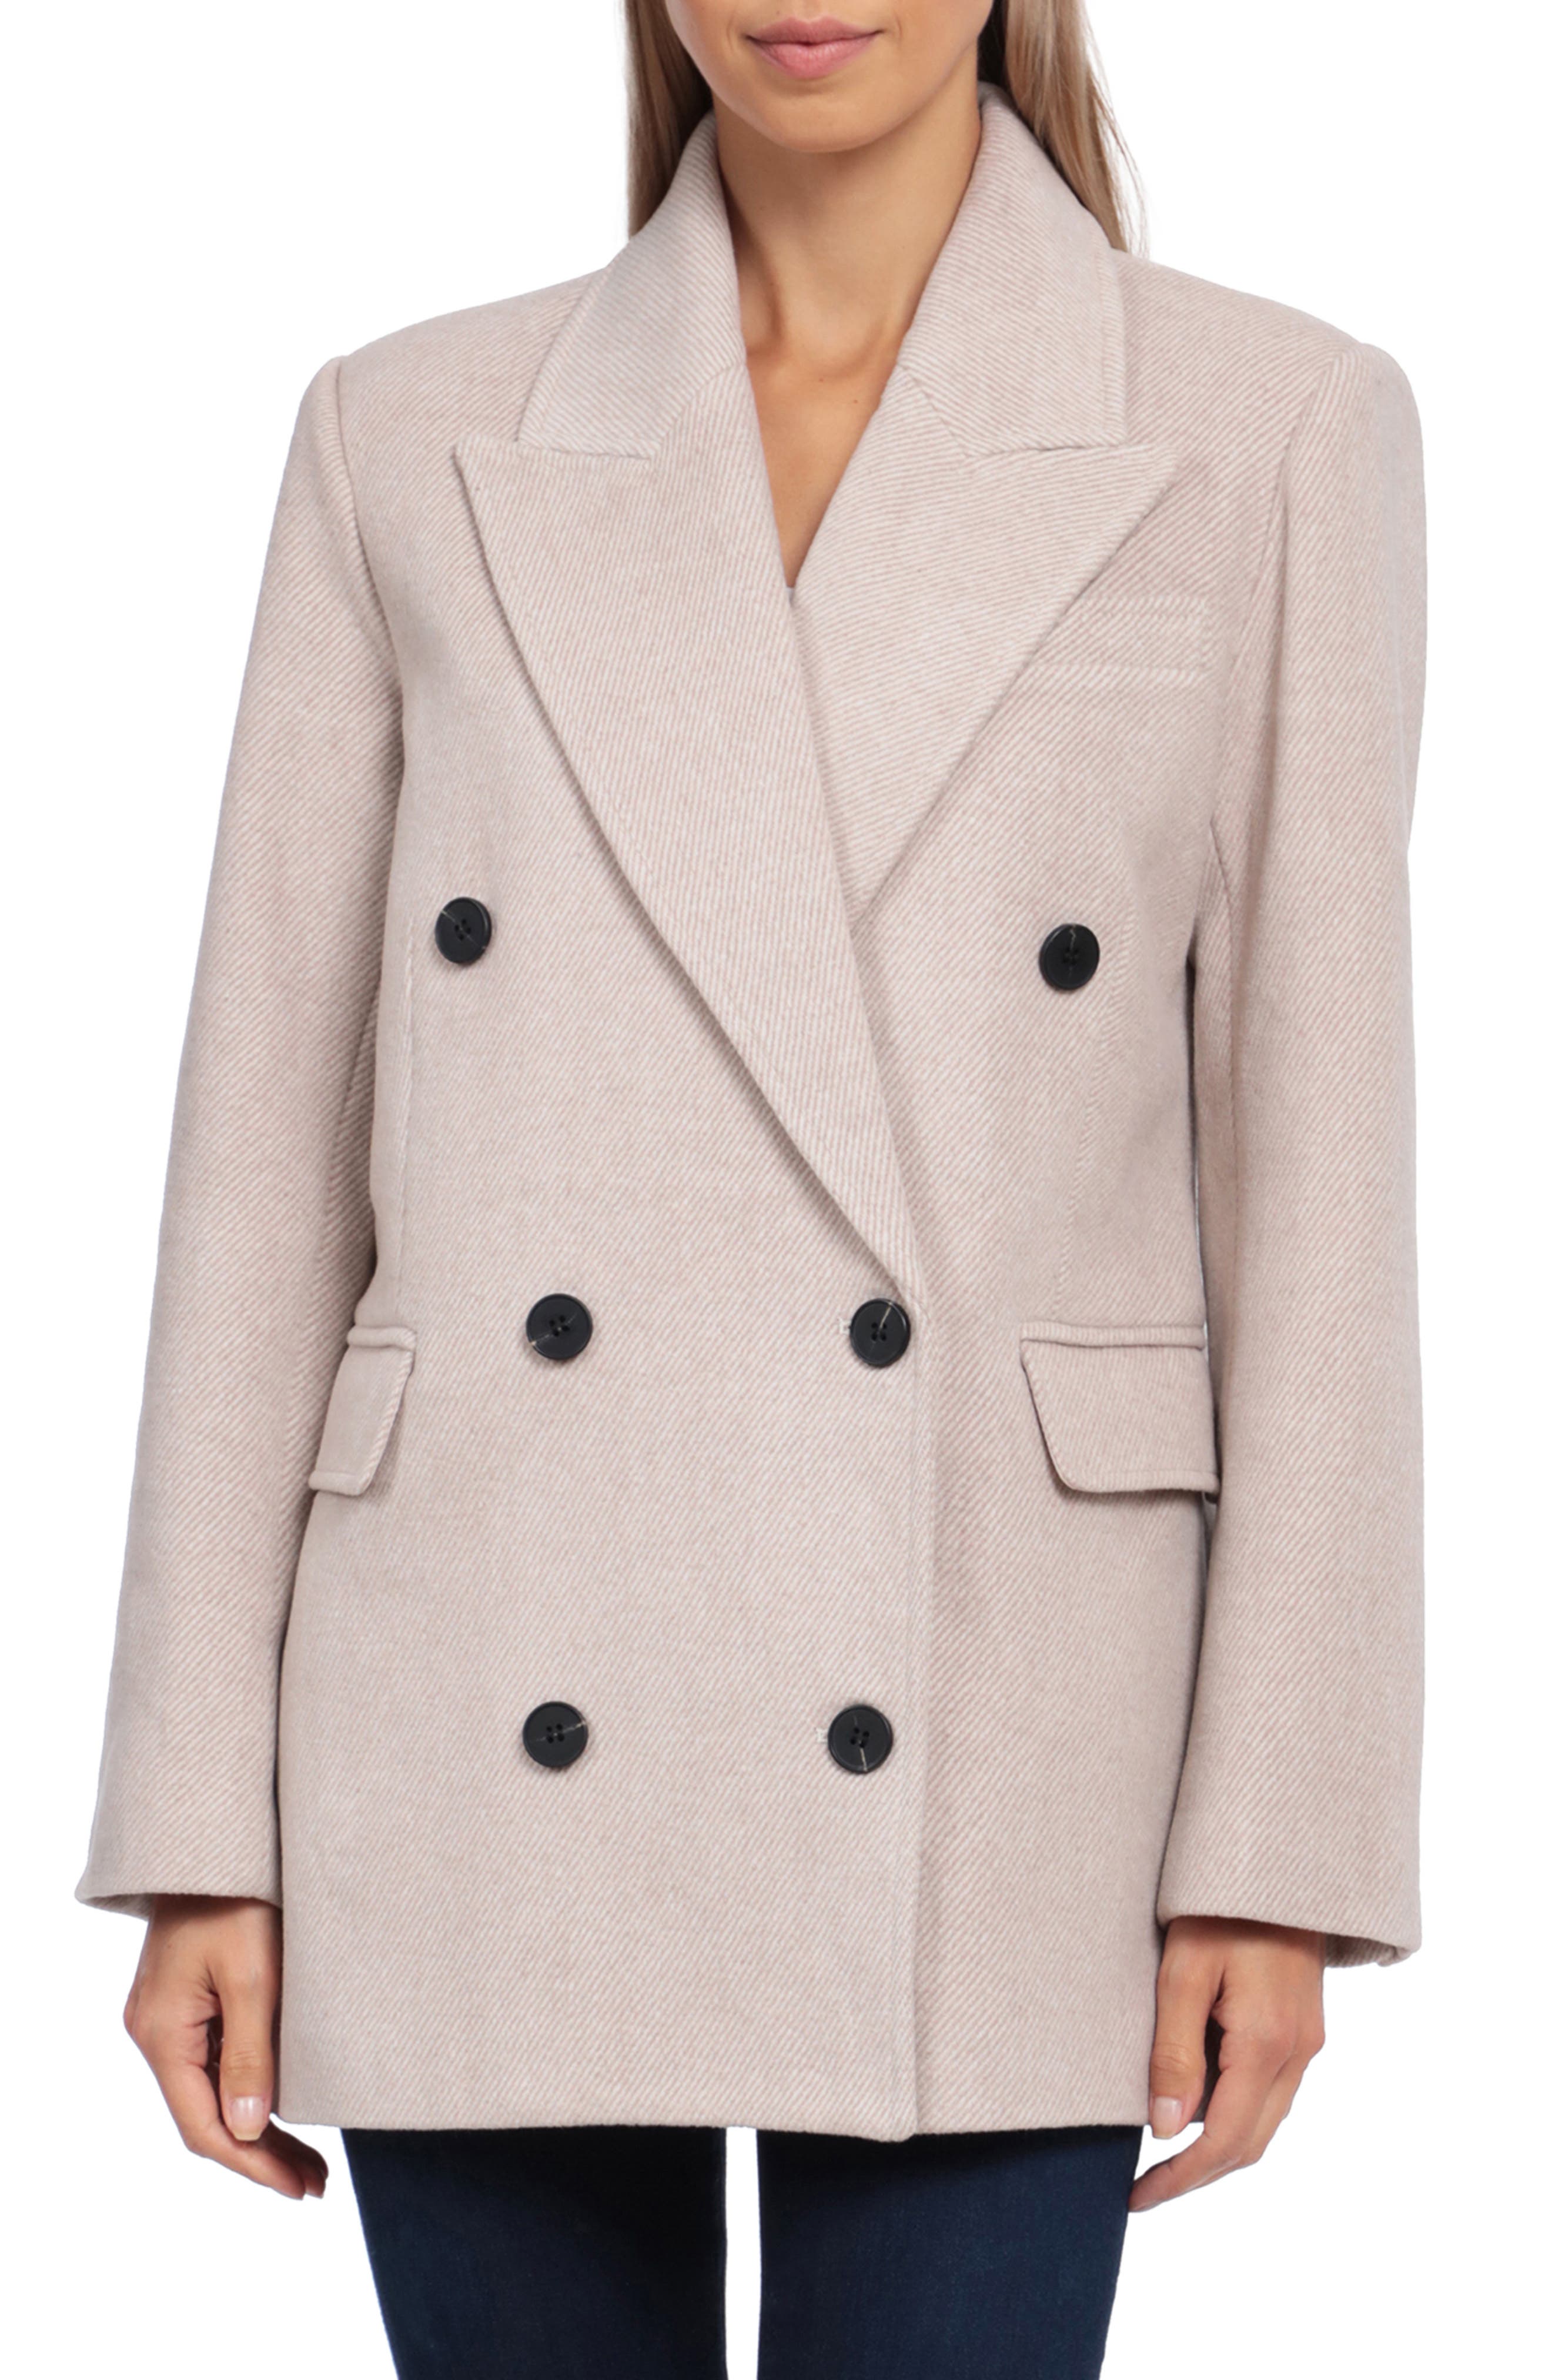 Short Pink Button Coat Pocket Jacket Cardigan Coats and JUL26,Pink,L,United States 